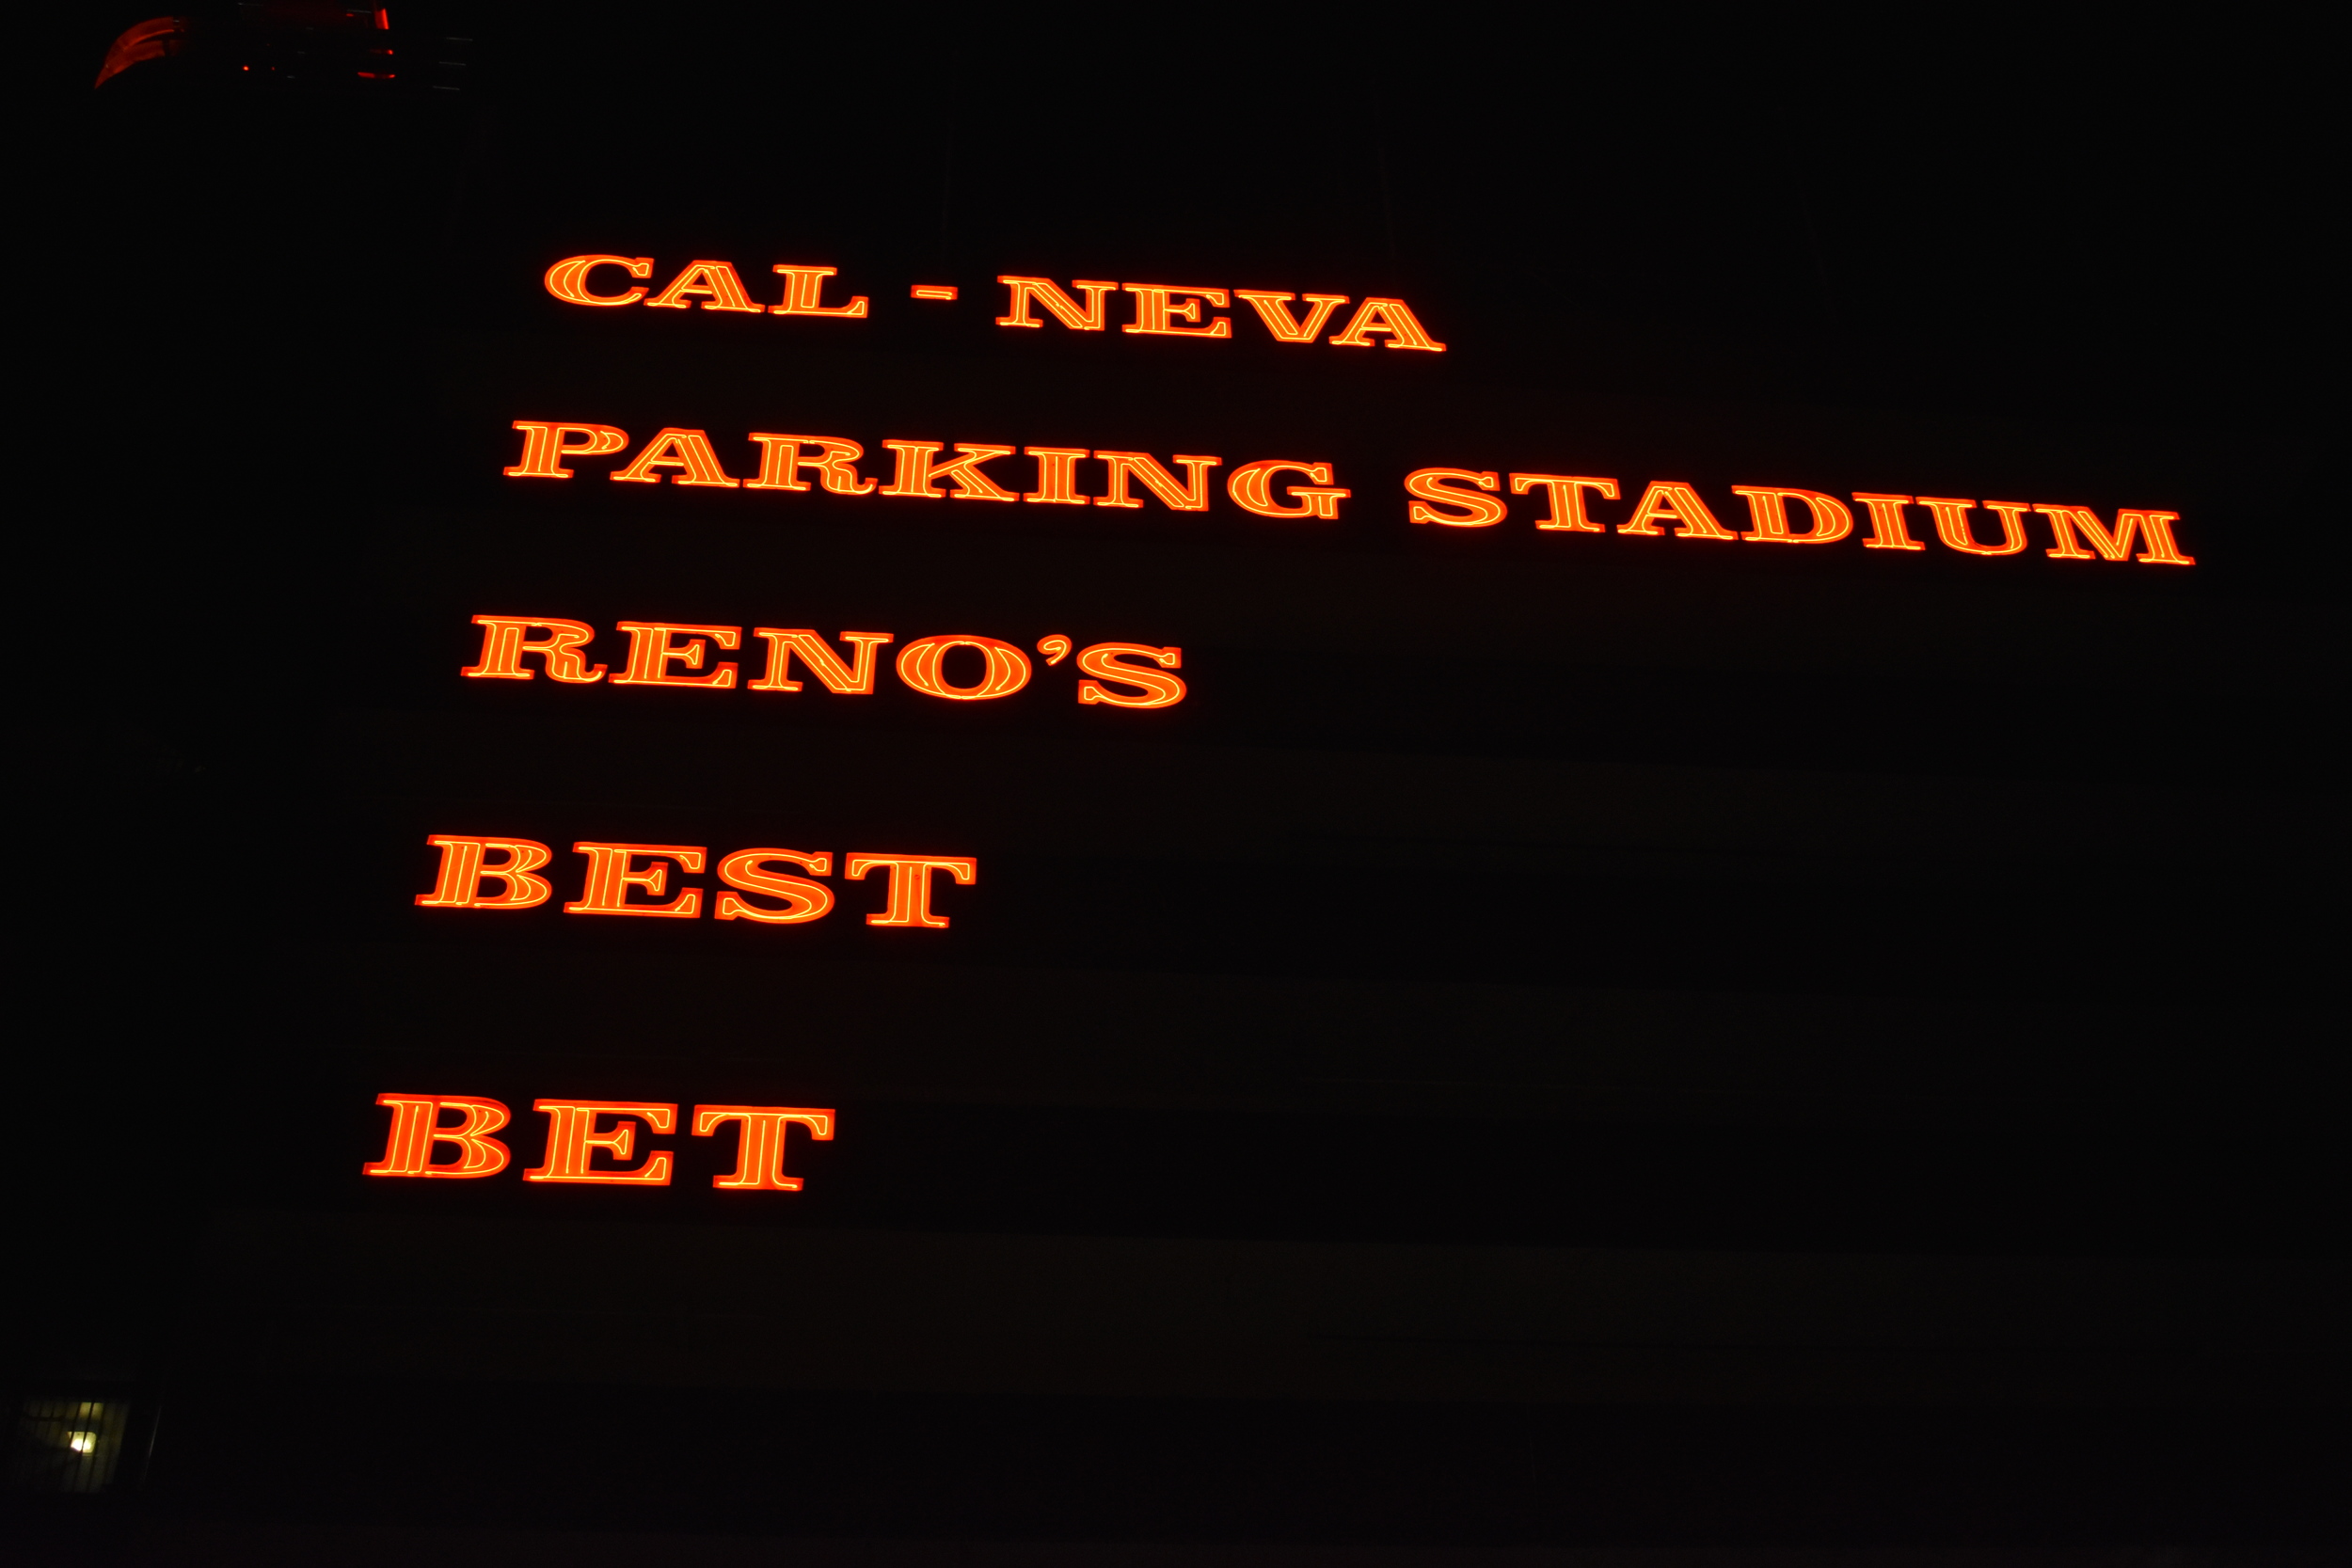 Cal-Neva parking stadium wall mounted sign, Reno, Nevada